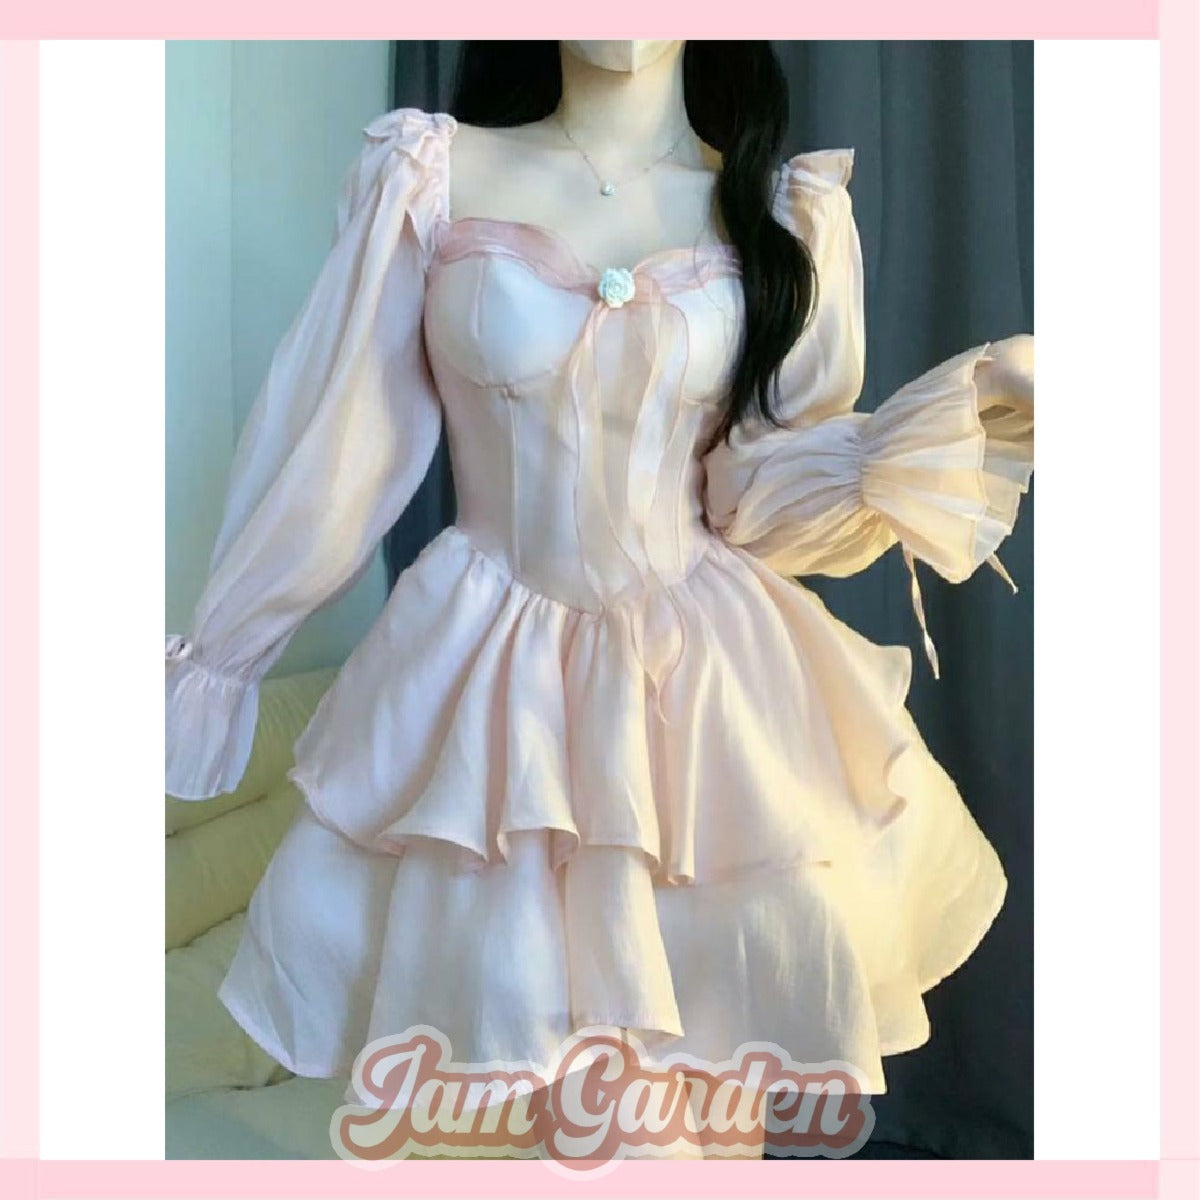 Pure Desire Hot Girl Lantern Sleeve Long Sleeve Princess Cake Dress